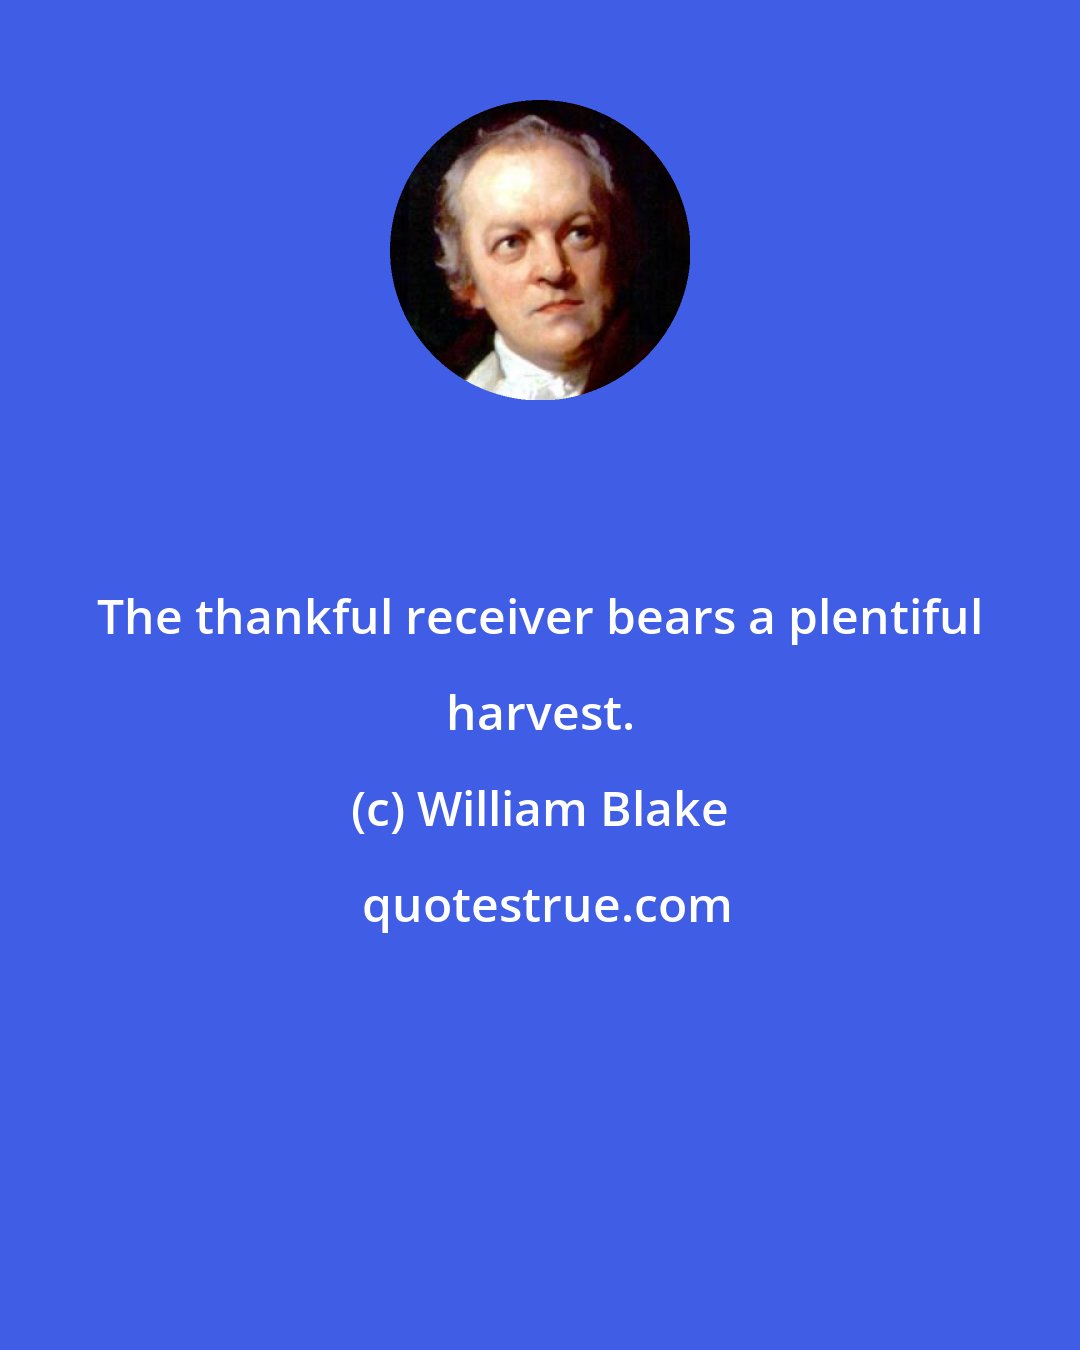 William Blake: The thankful receiver bears a plentiful harvest.